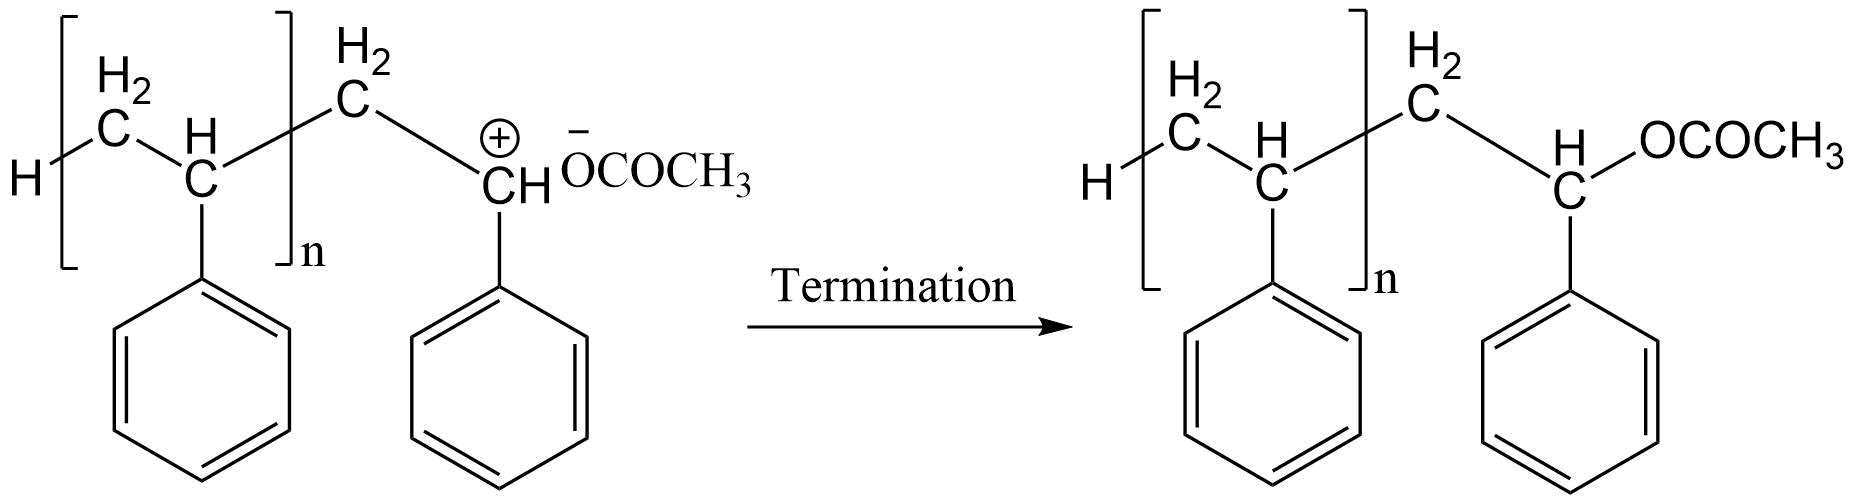 termination step in styrene polumerization